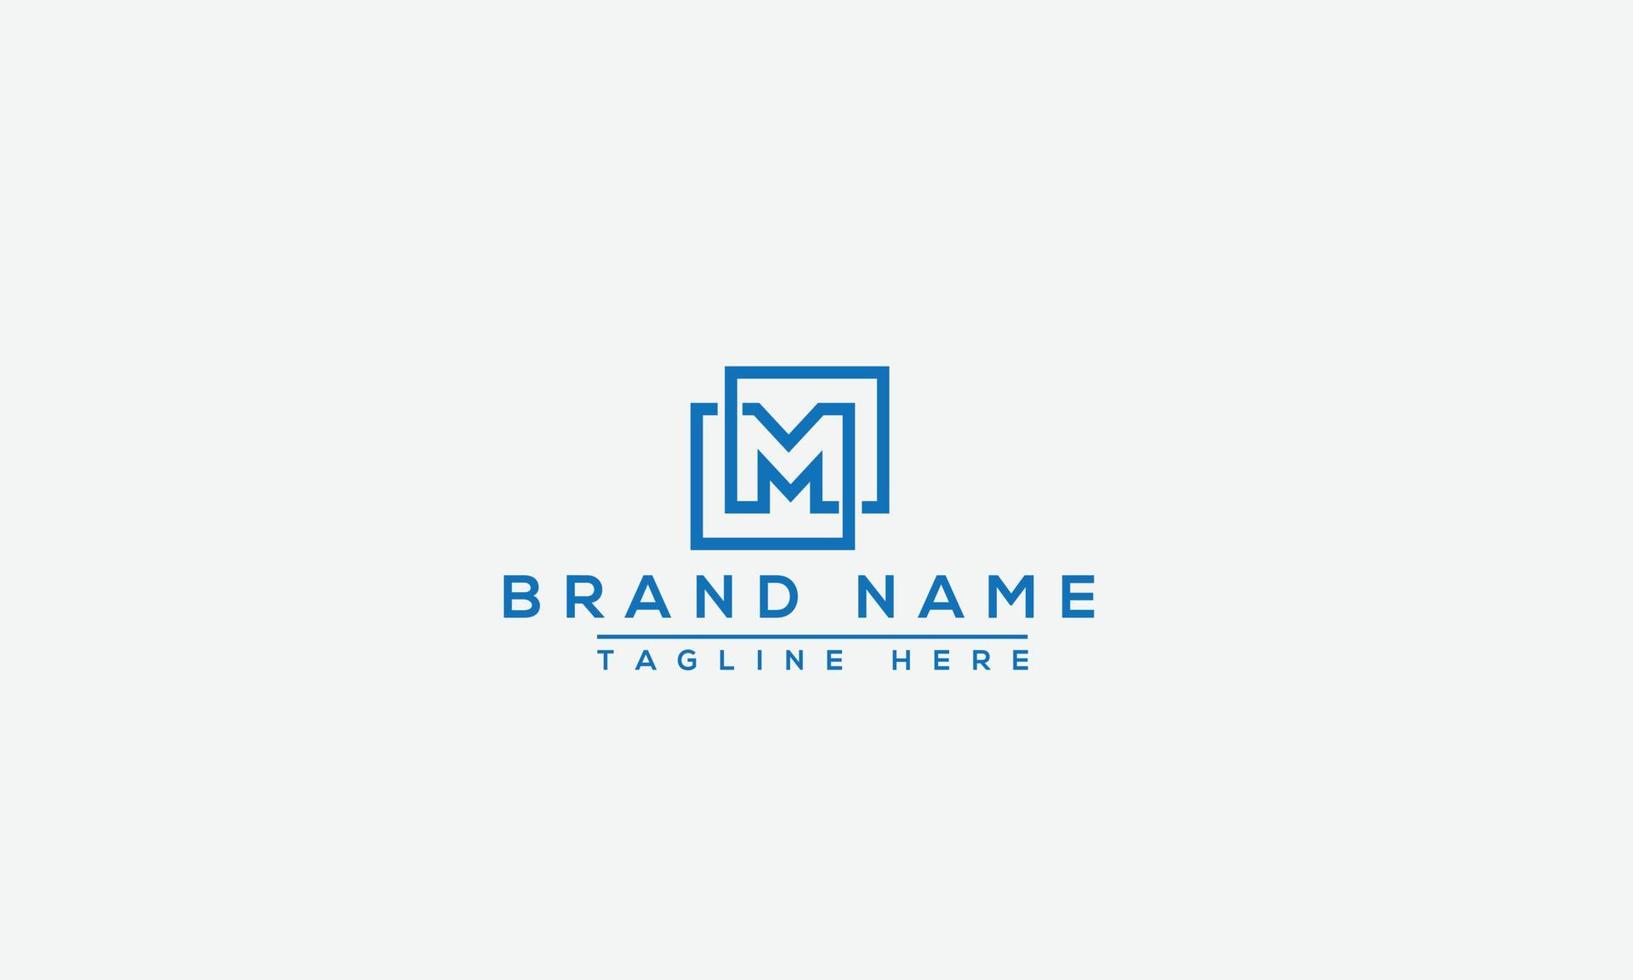 elemento de branding gráfico de vetor de modelo de design de logotipo mm.